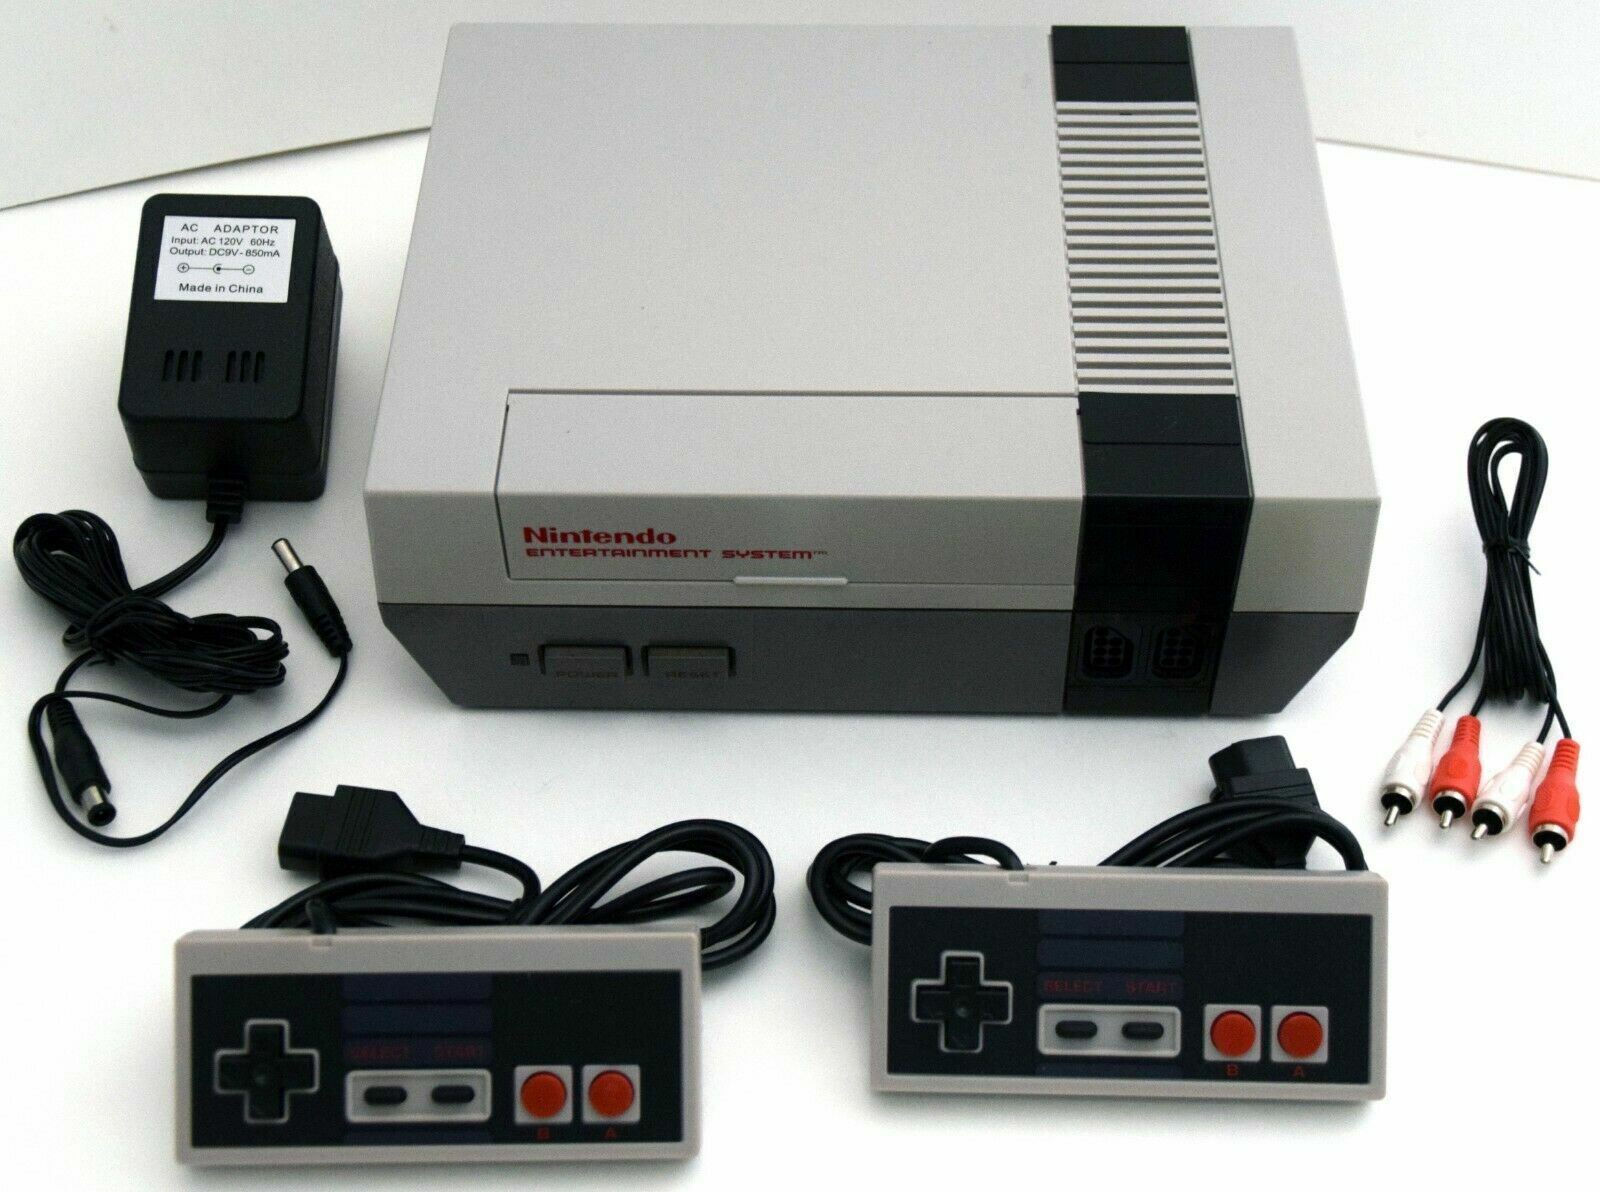 Primary image for eBay Refurbished 
ORIGINAL Nintendo Entertainment System Video Game Bundle Se...